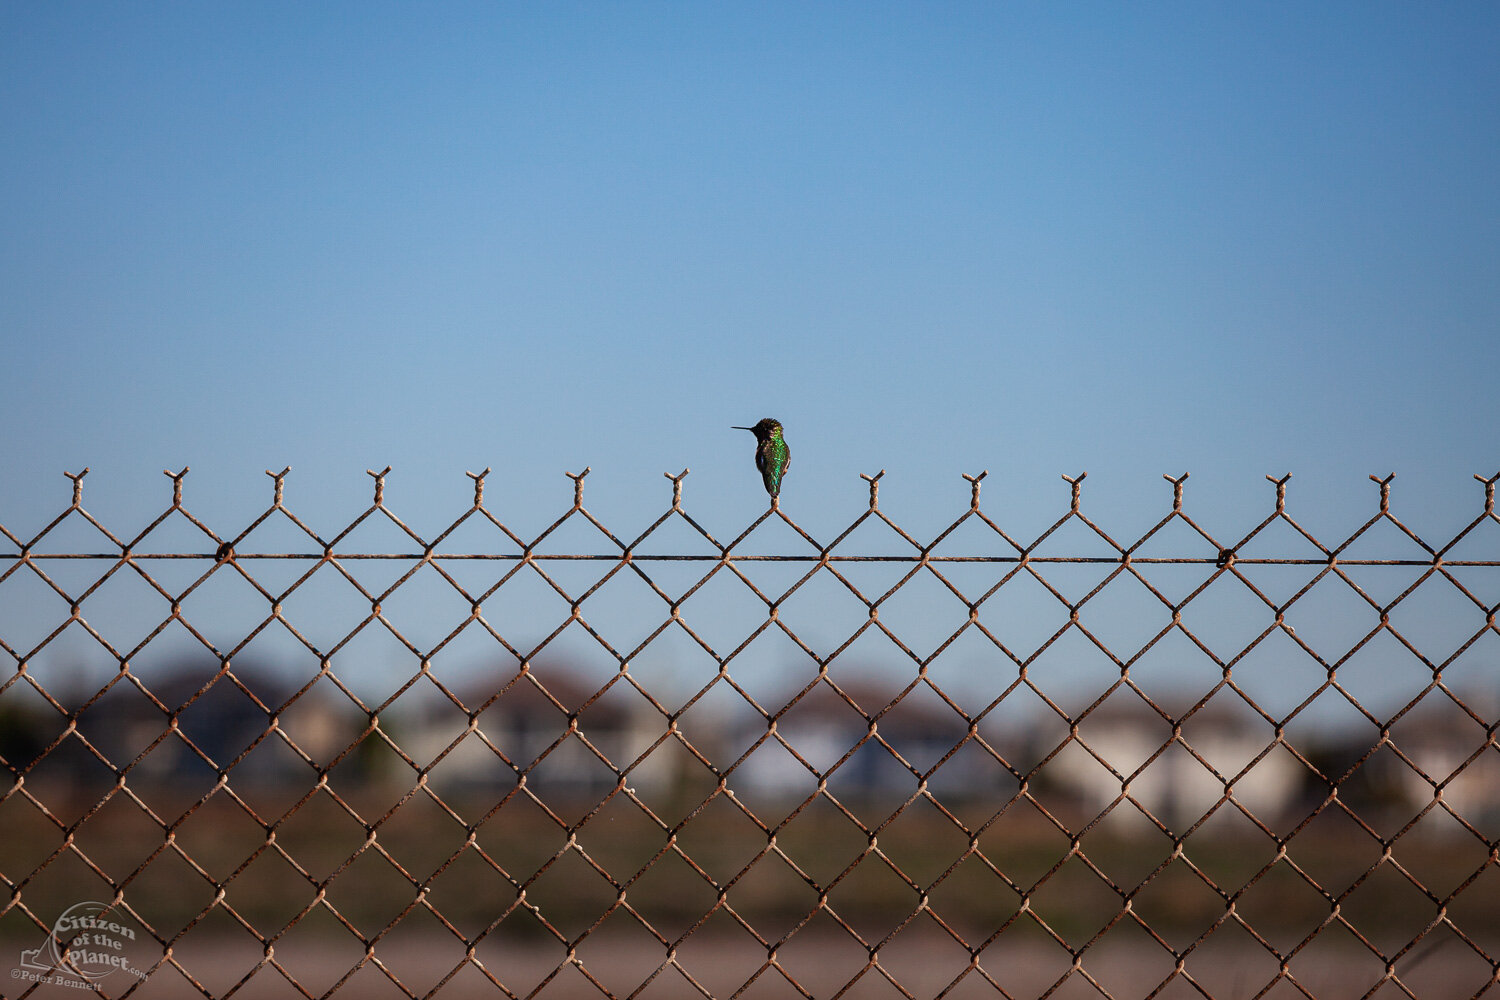  A hummingbird sitting atop a fence. 